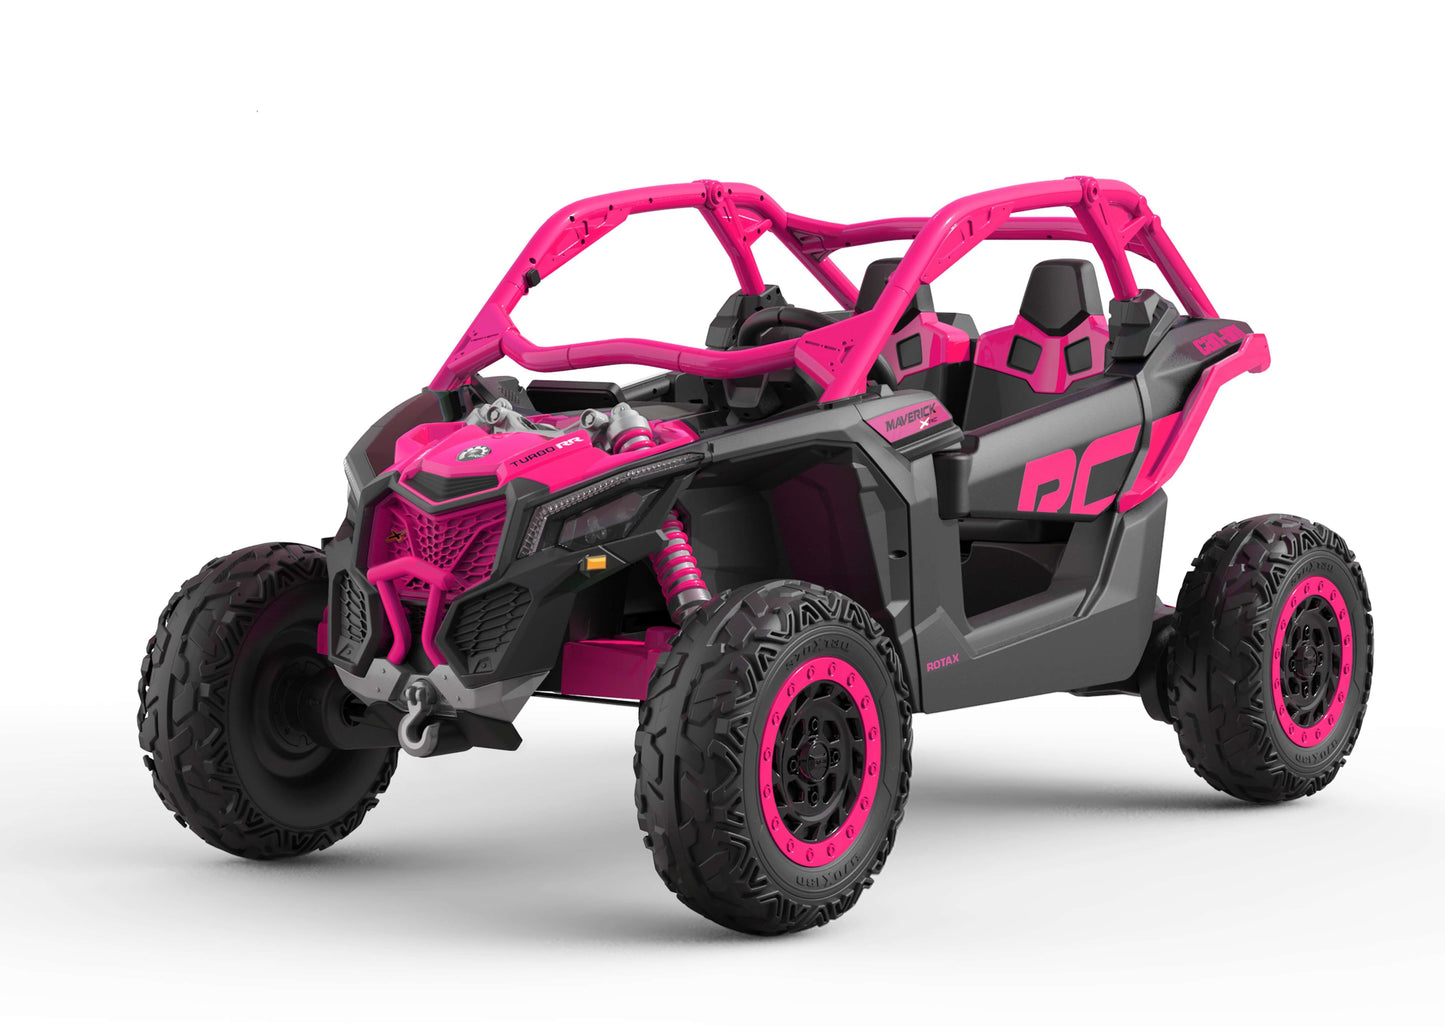 24V Can-Am Maverick X3 Kids Ride-On Buggy - Pink